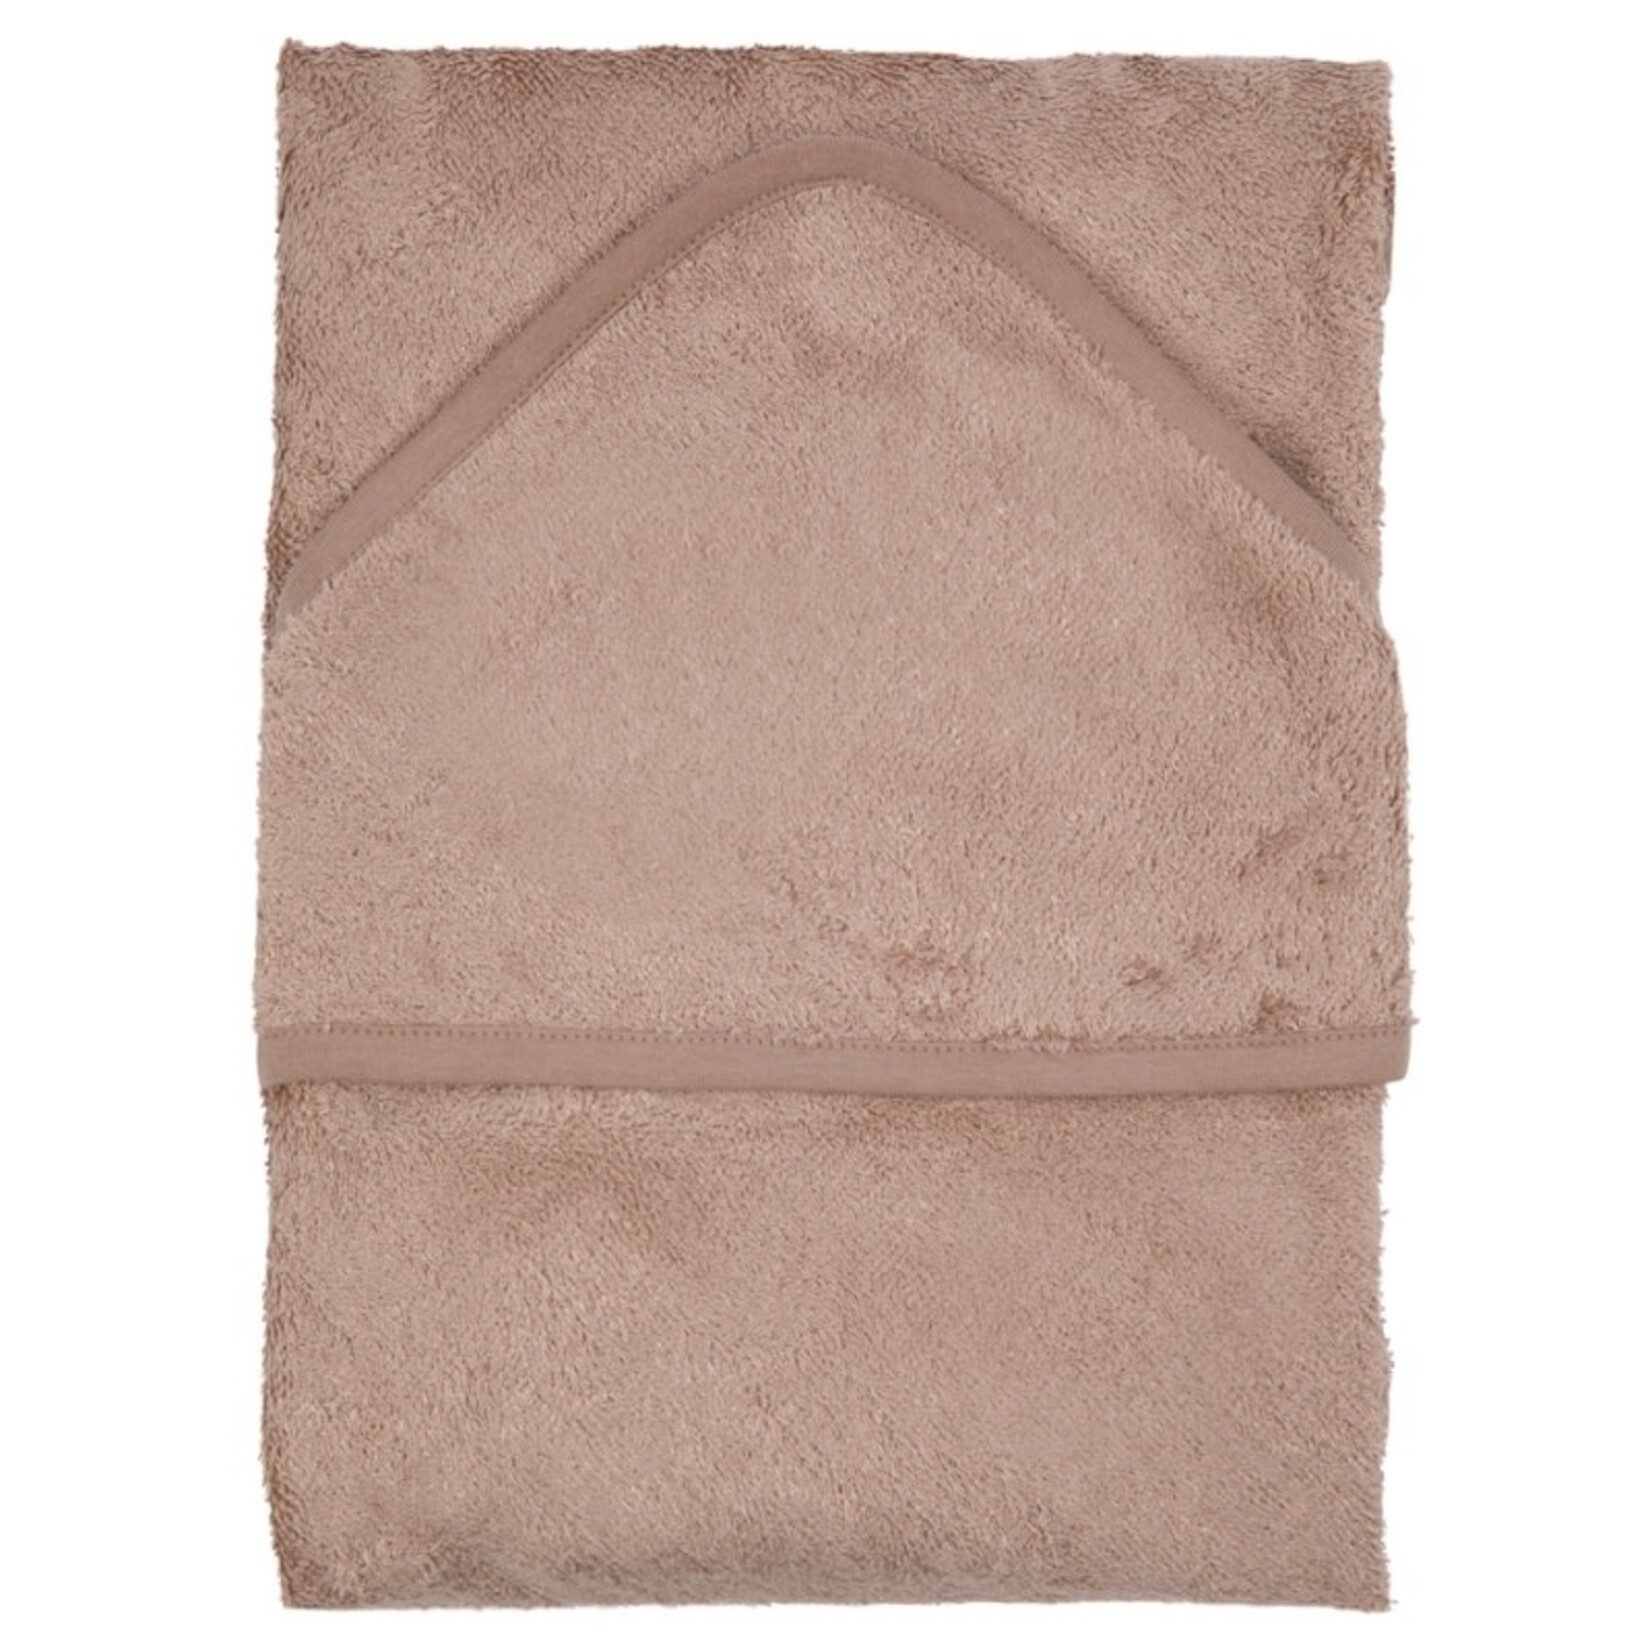 Timboo Hooded Towel Xxl - Savannah Sand 95x95